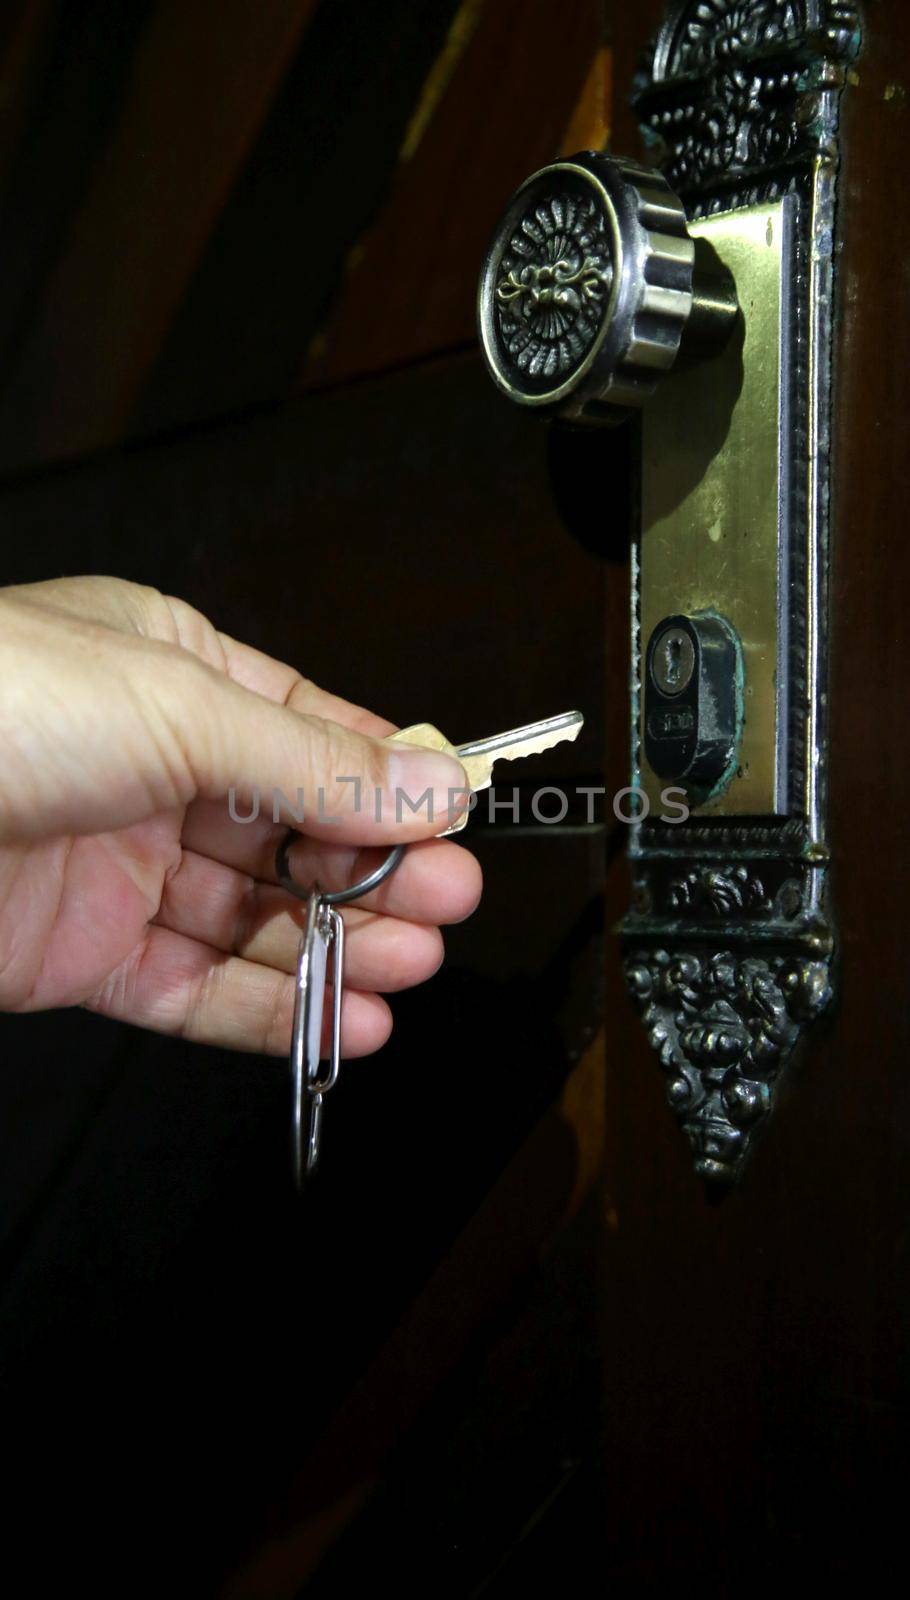 salvador, bahia brazil - may 26, 2020: key is seen next to the apartemnto door lock in the city of Salvador.